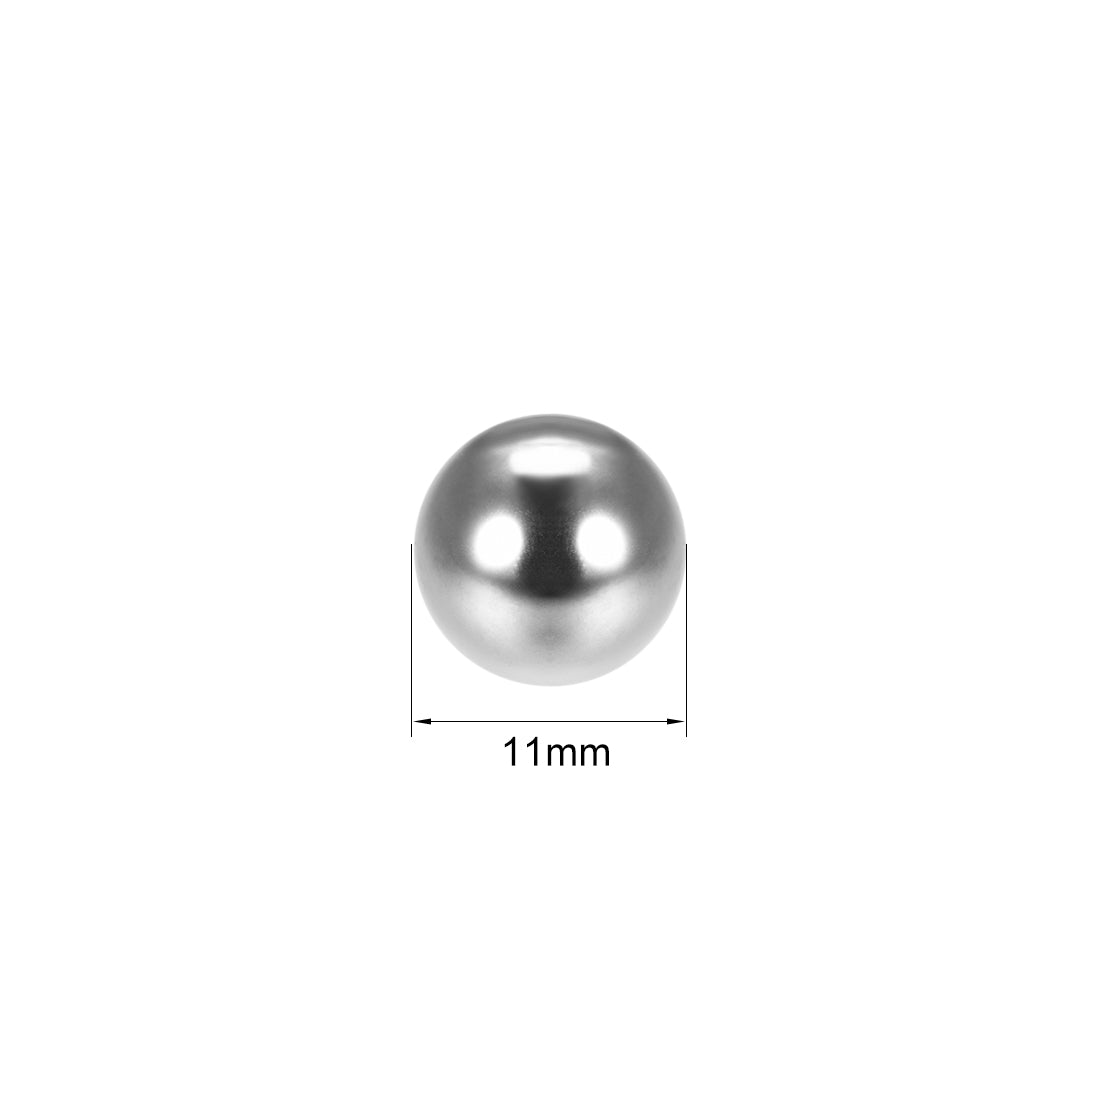 uxcell Uxcell 4.5mm Precision Chrome Steel Bearing Balls G25 100pcs